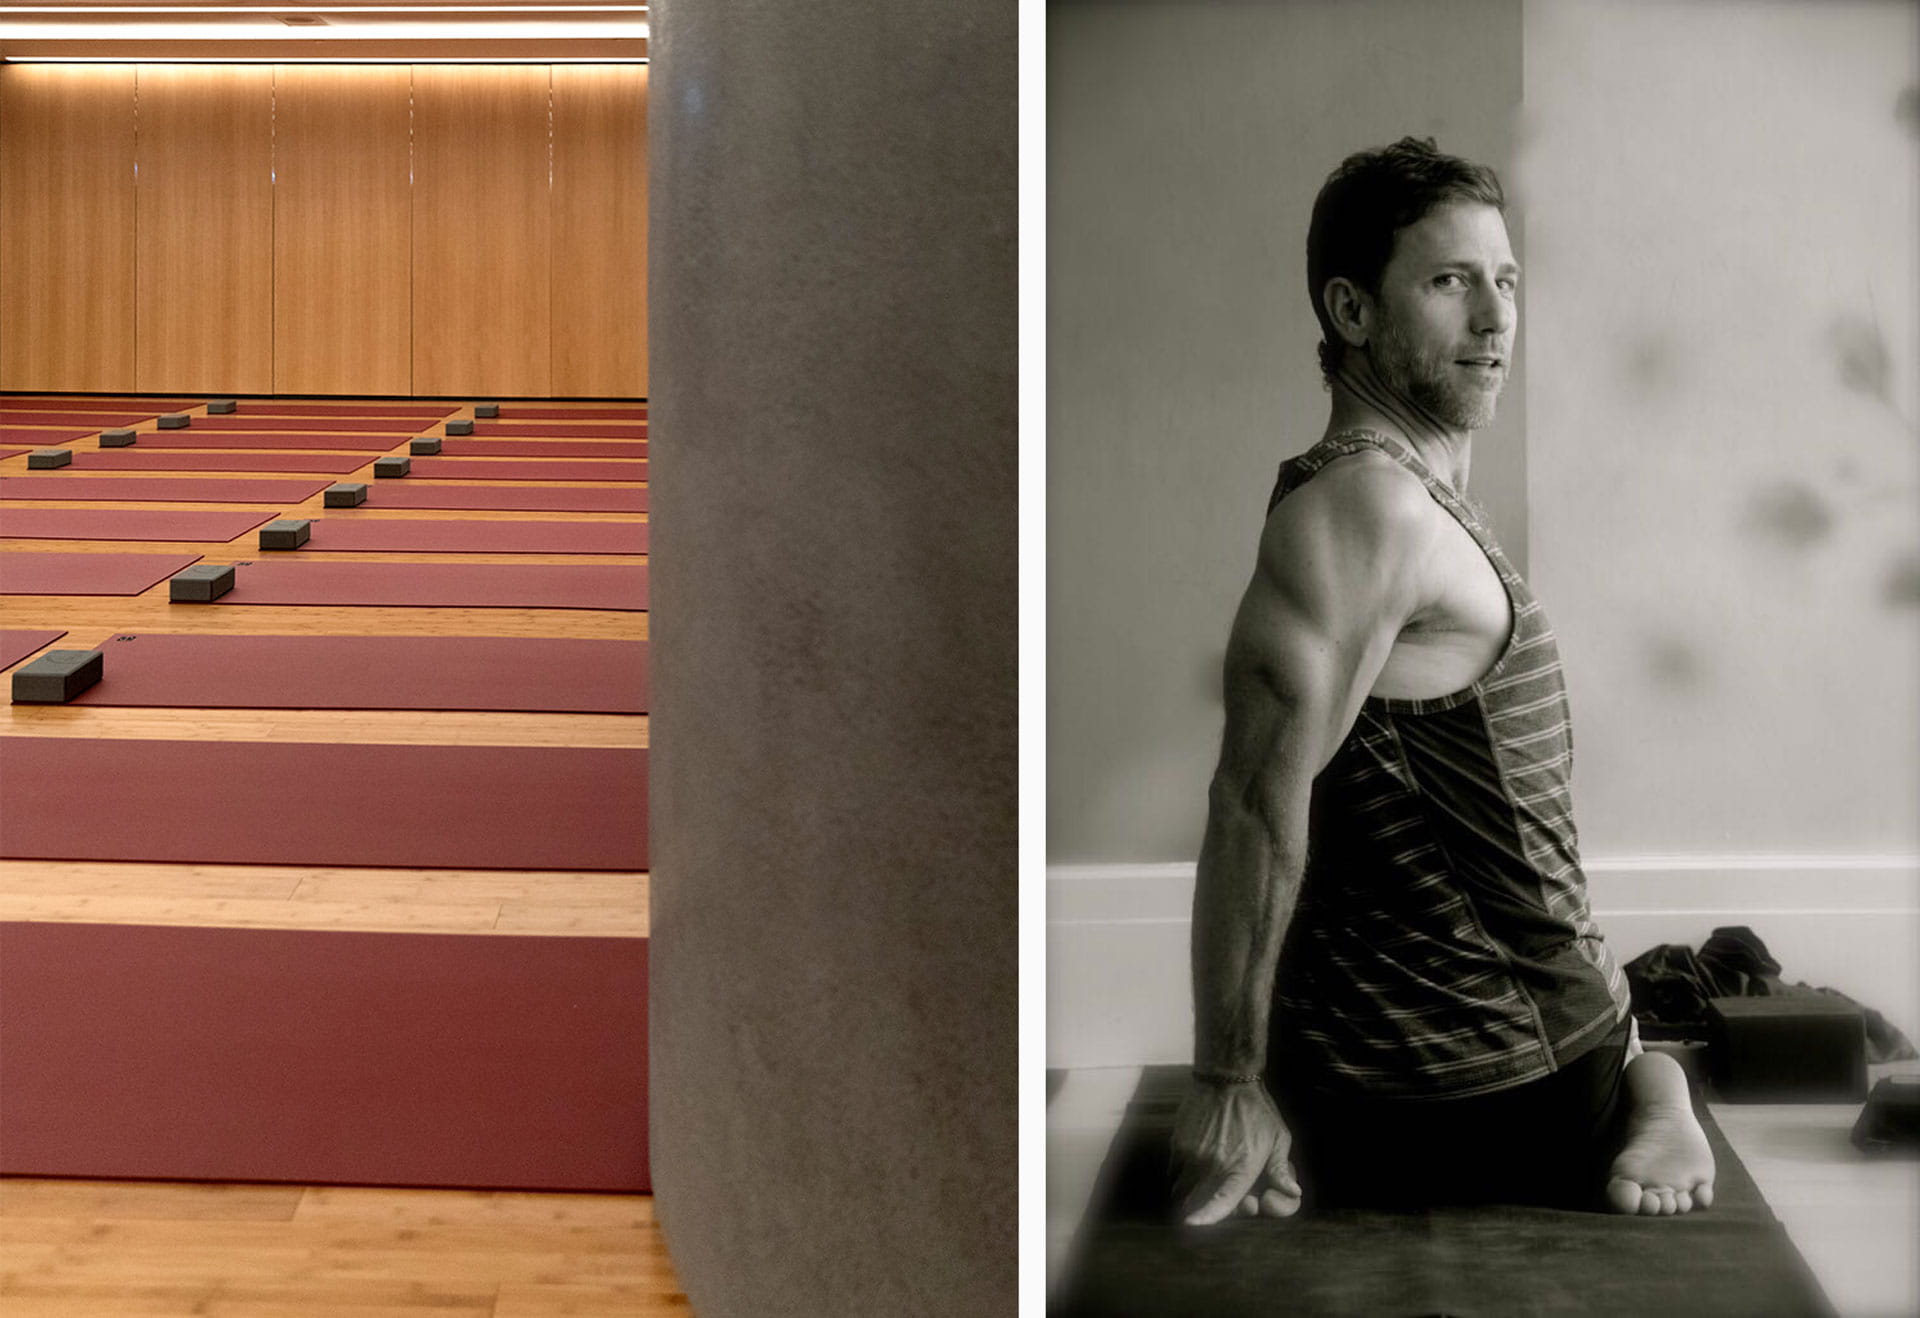 Left: Pure Yoga’s new studio in Pacific Place        Right: Creelman demonstrates his flexibility